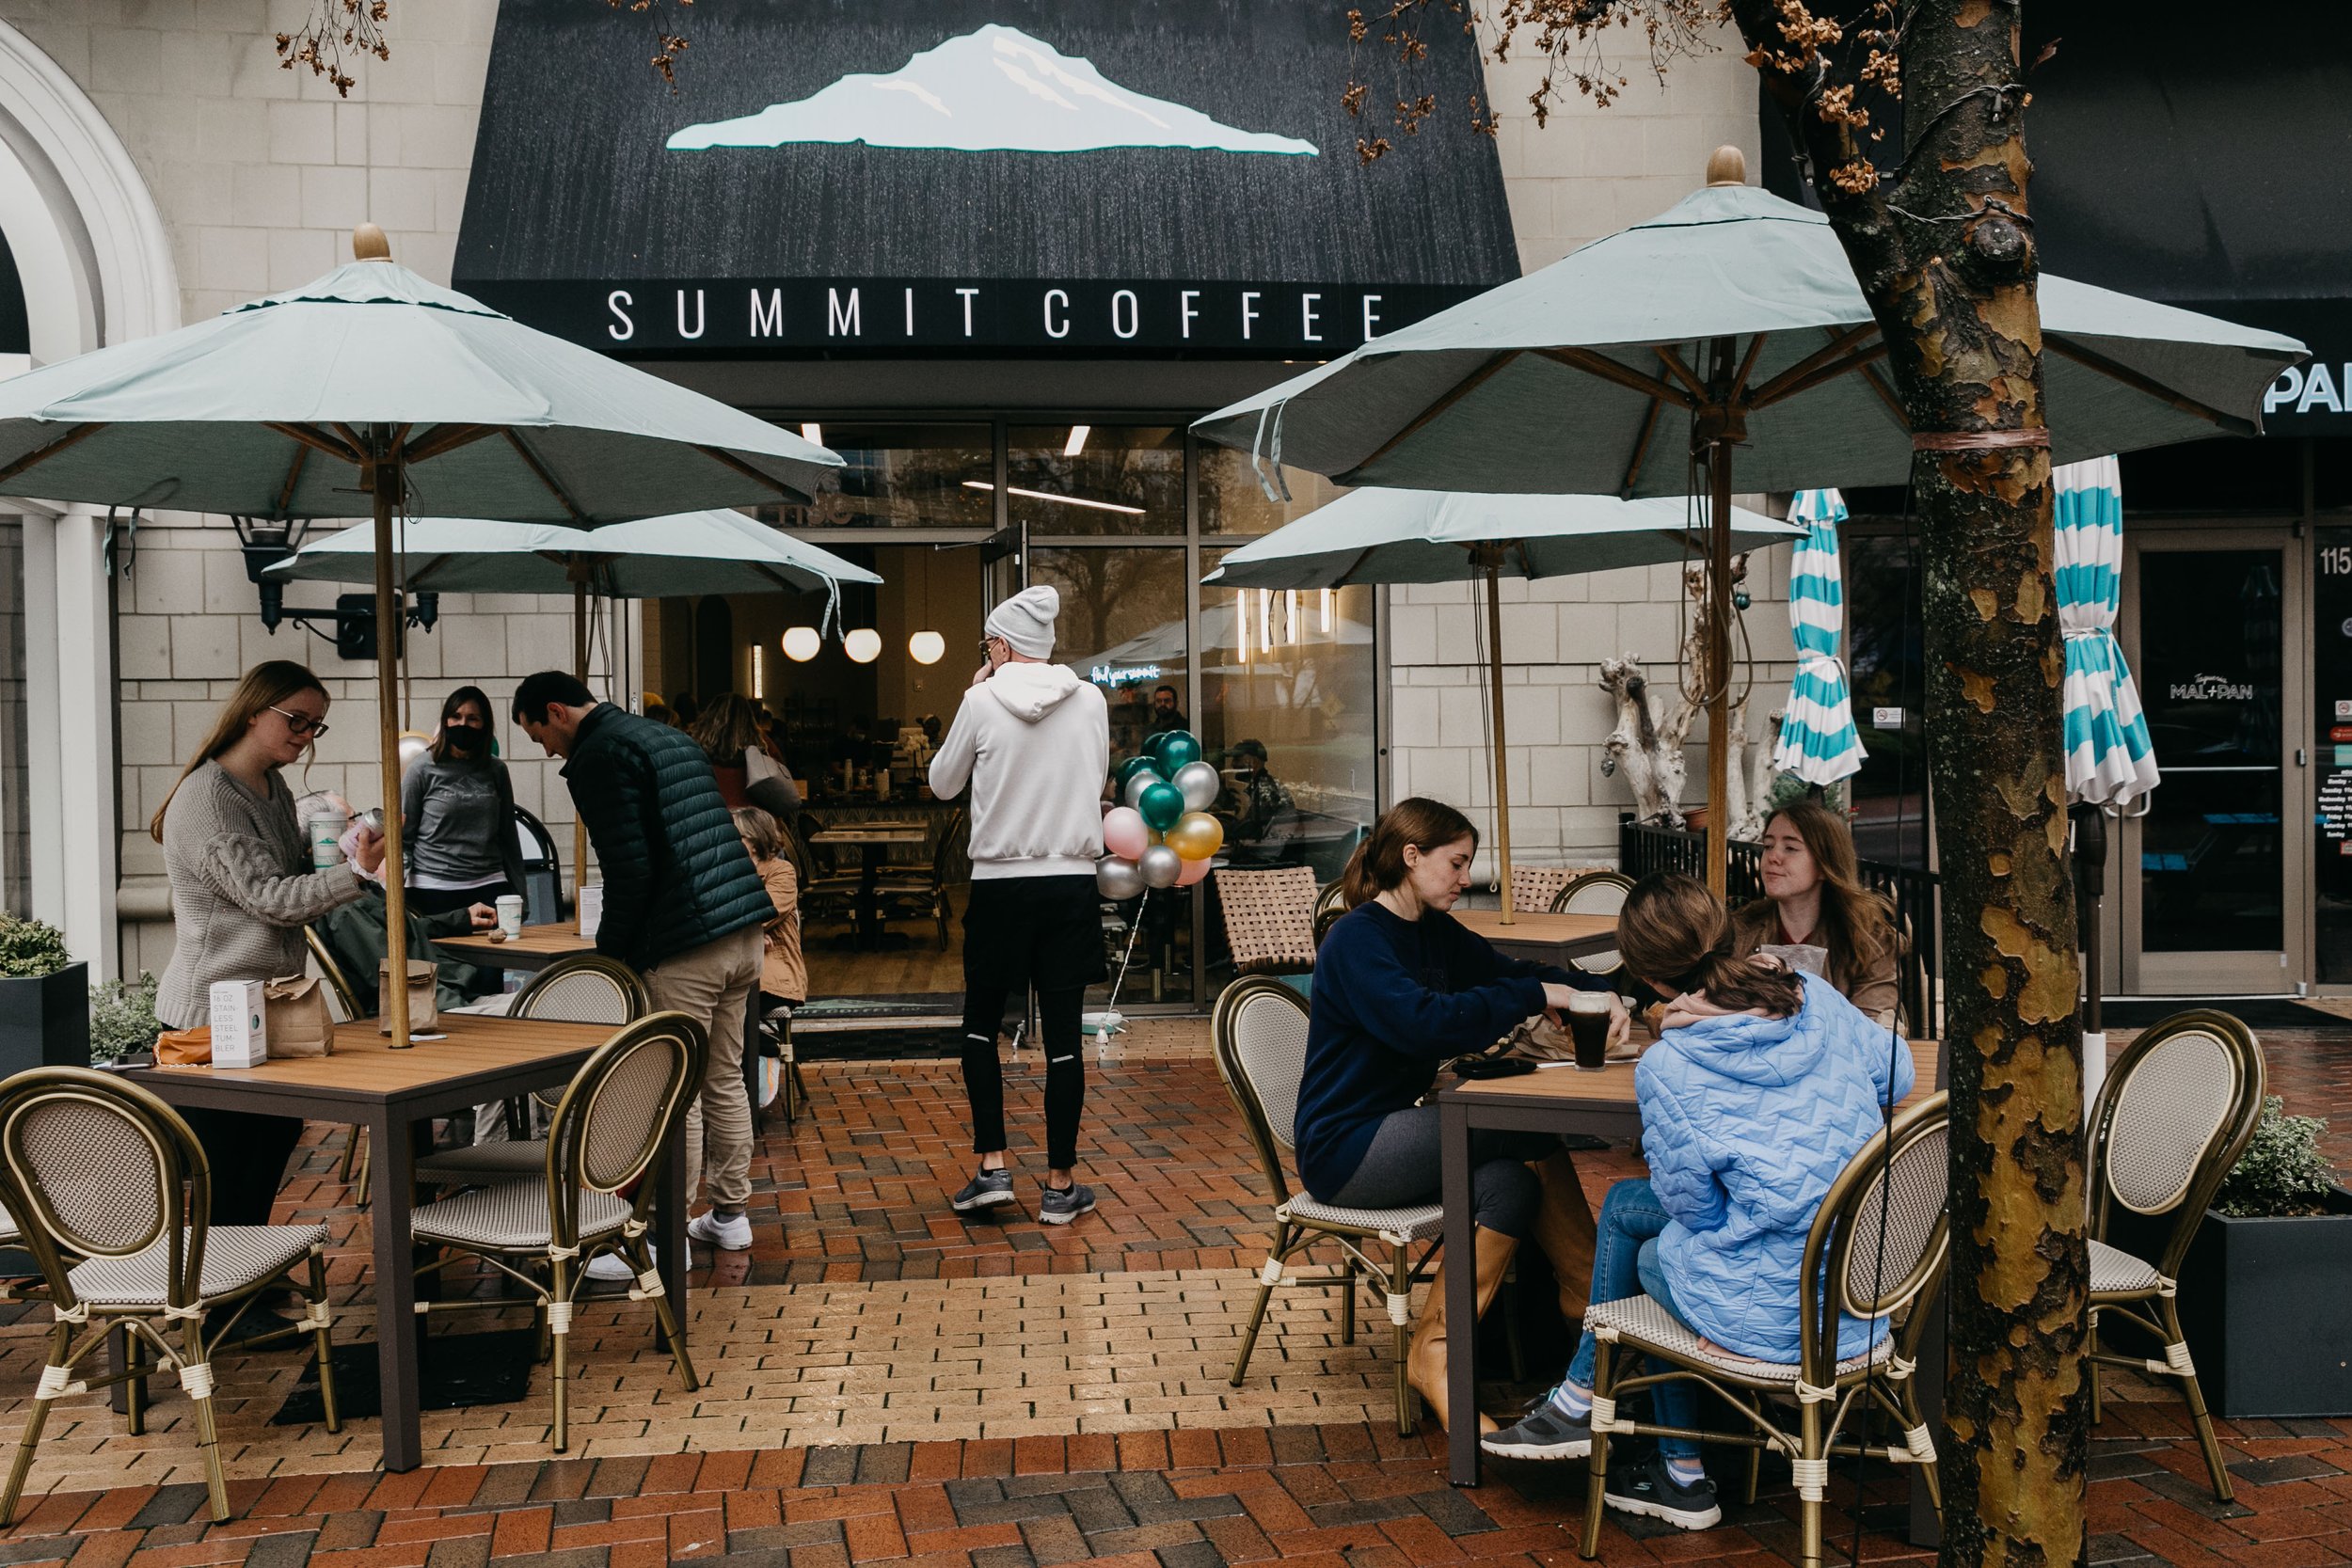 Summit Coffee Co. Website | https://summitcoffee.com/